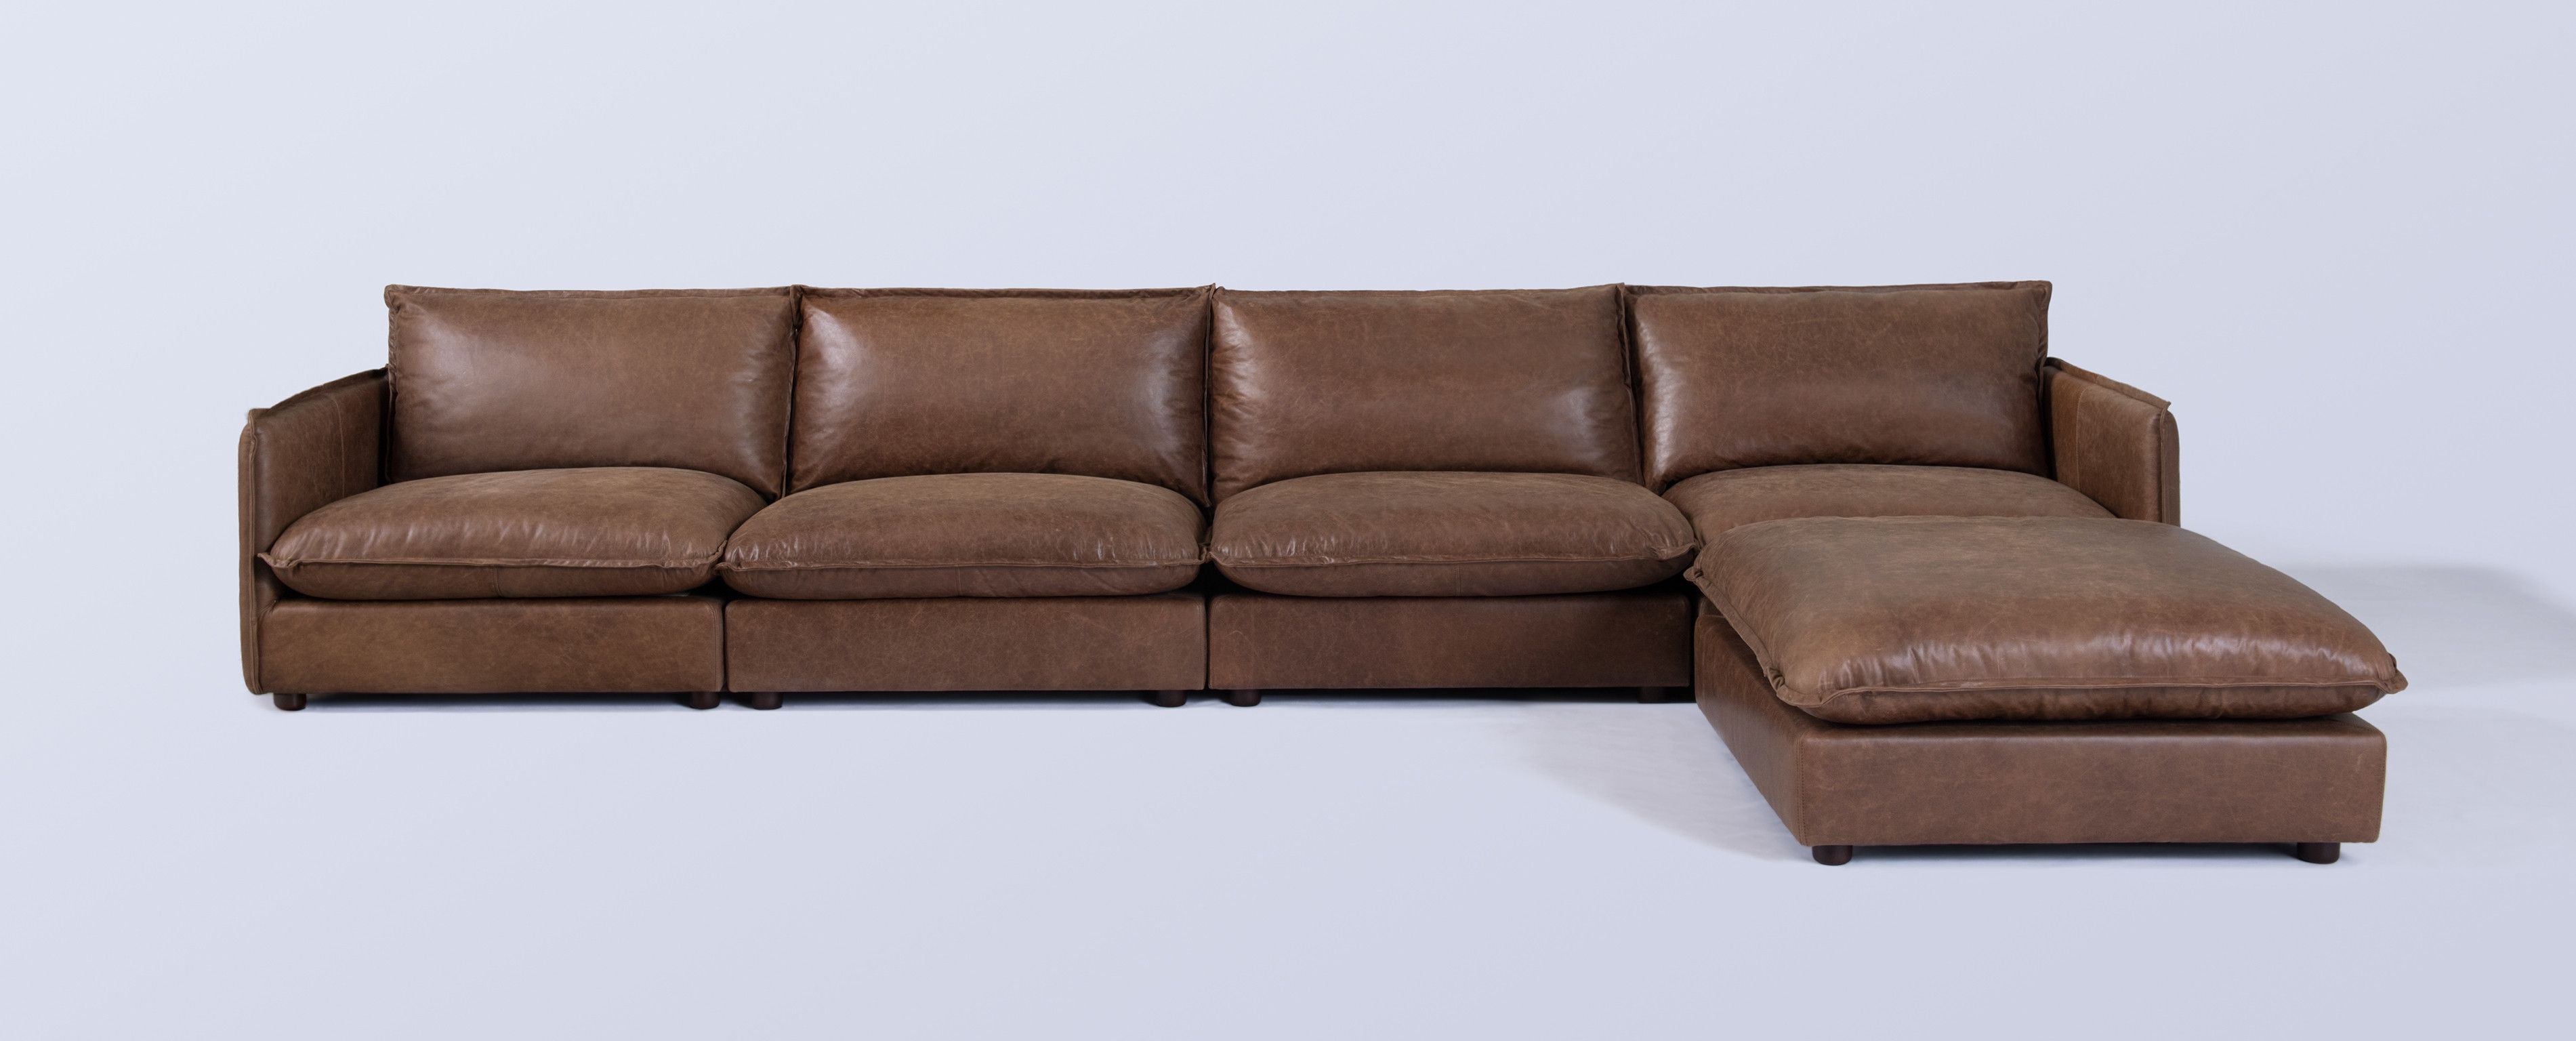 Sofa Modular Leather Cornerofas Uk Melbournetaceyectional And Pertaining To Nz Sectional Sofas (Photo 3 of 10)